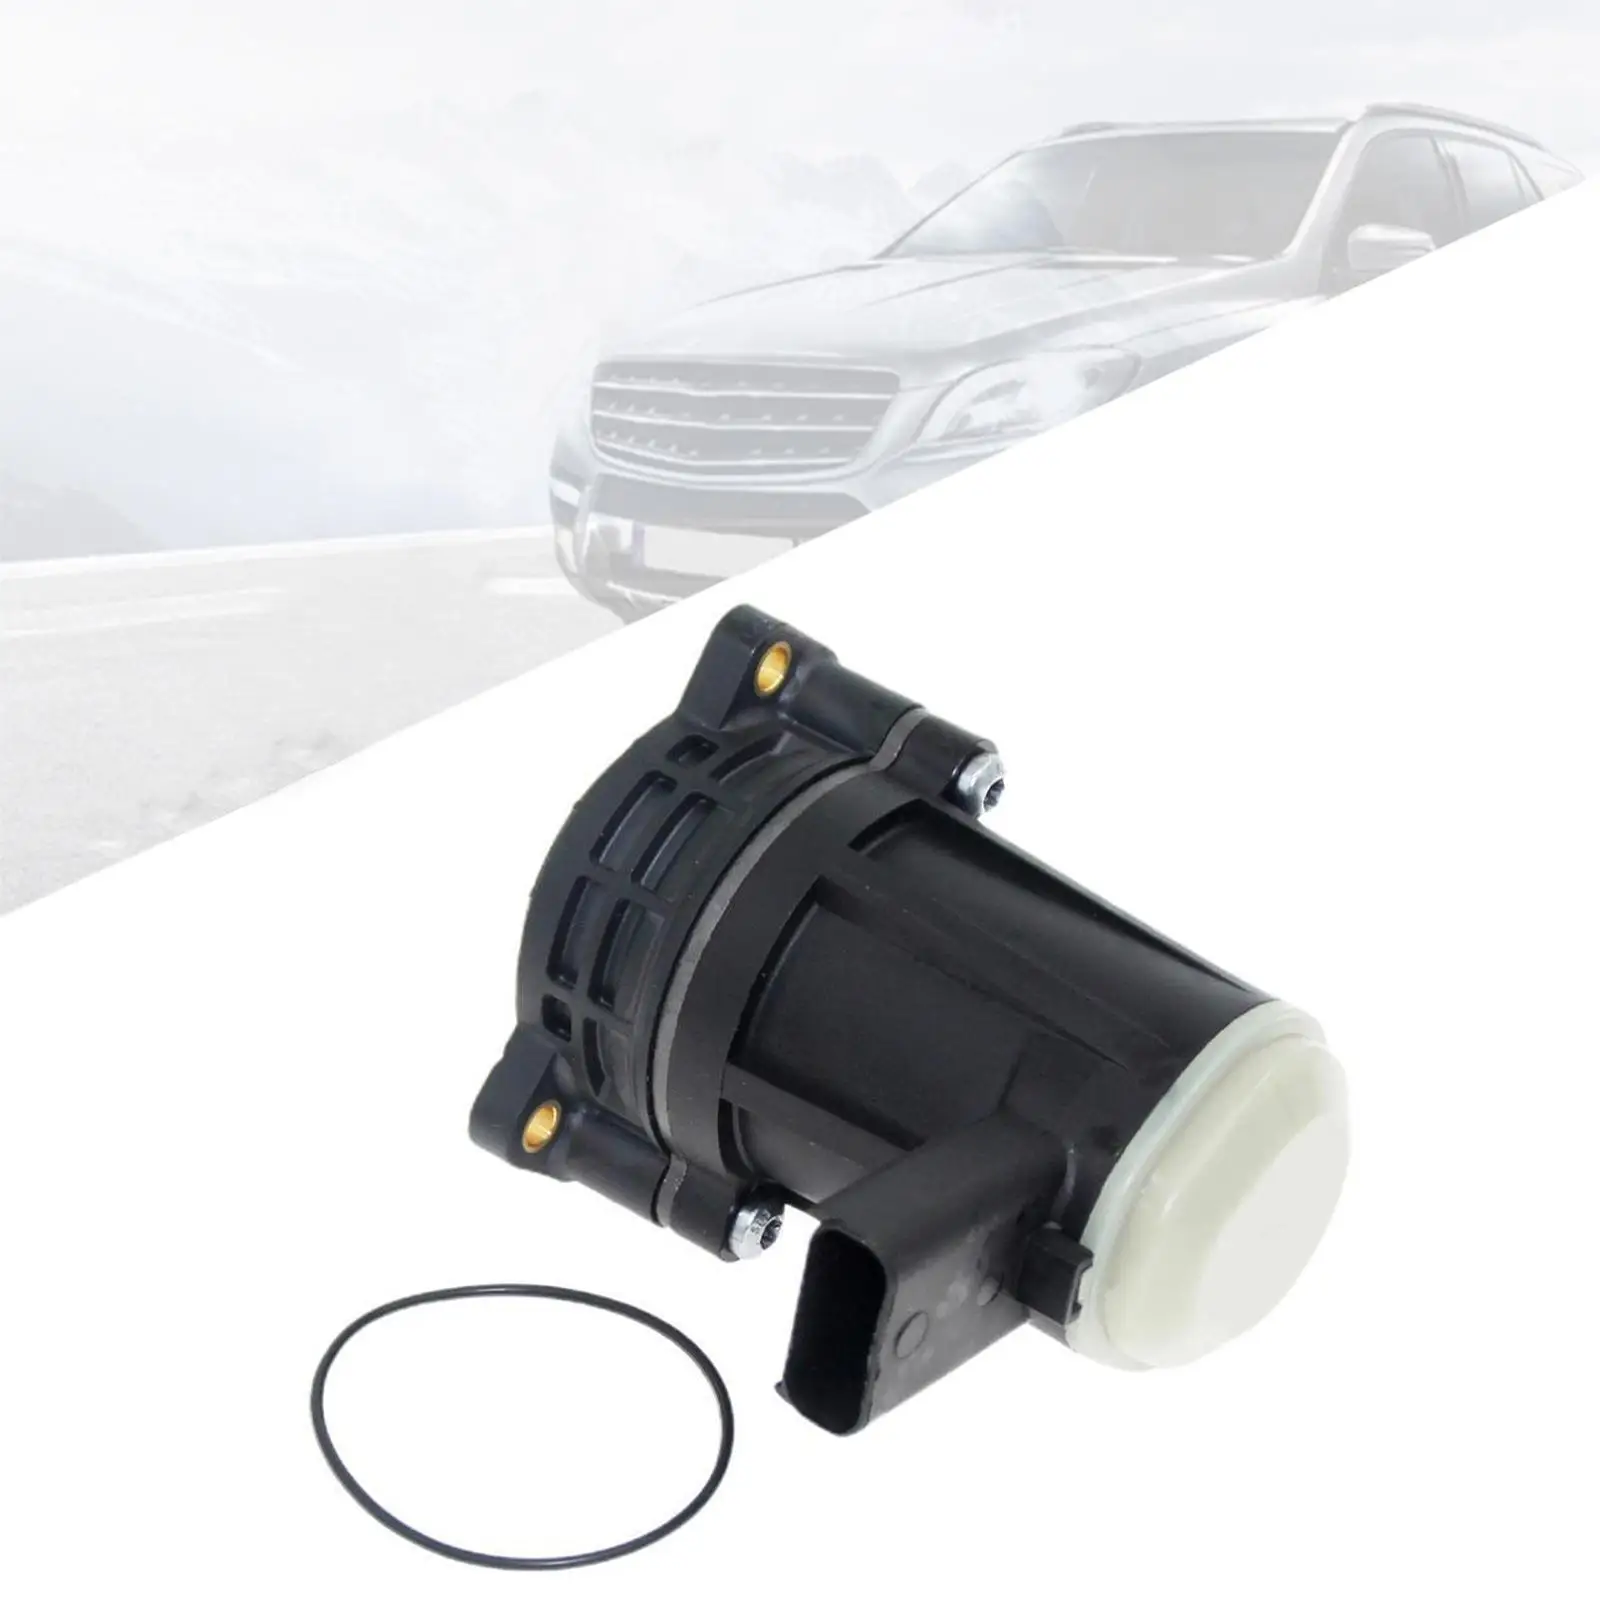 Parking Brake Caliper Motor Accessories Direct Replaces Repair Parts Easy to